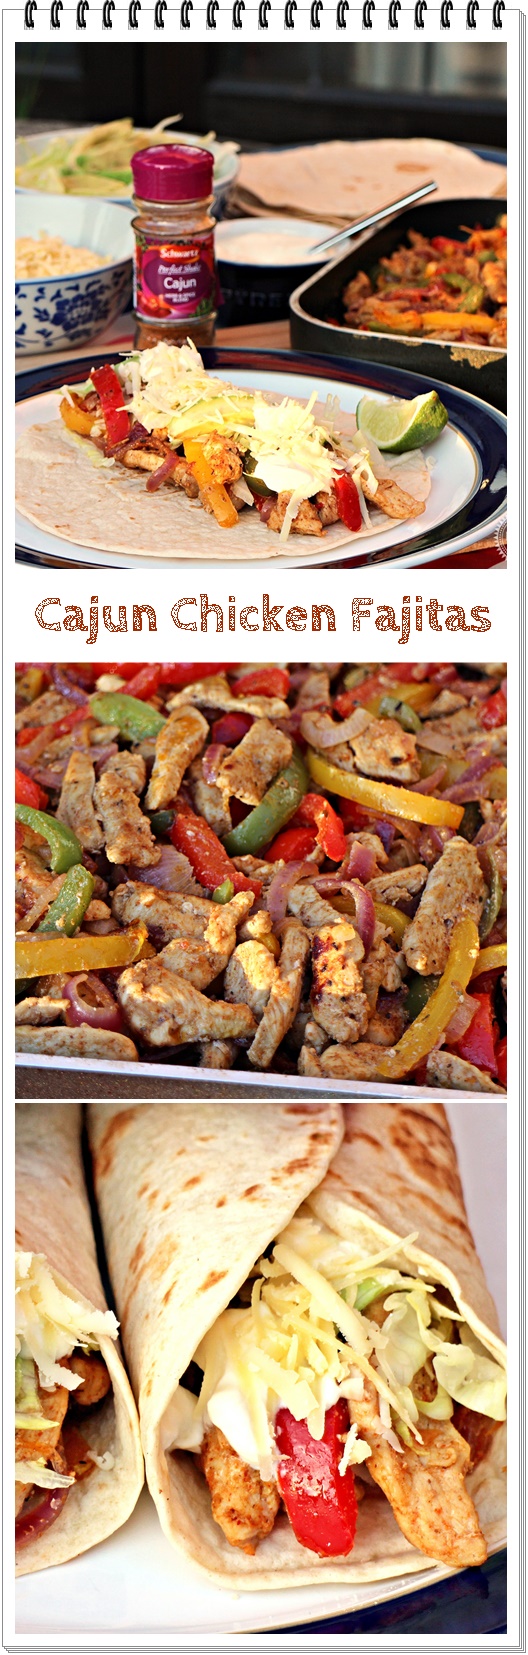 Cajun Chicken Fajitas - Fab Food 4 All